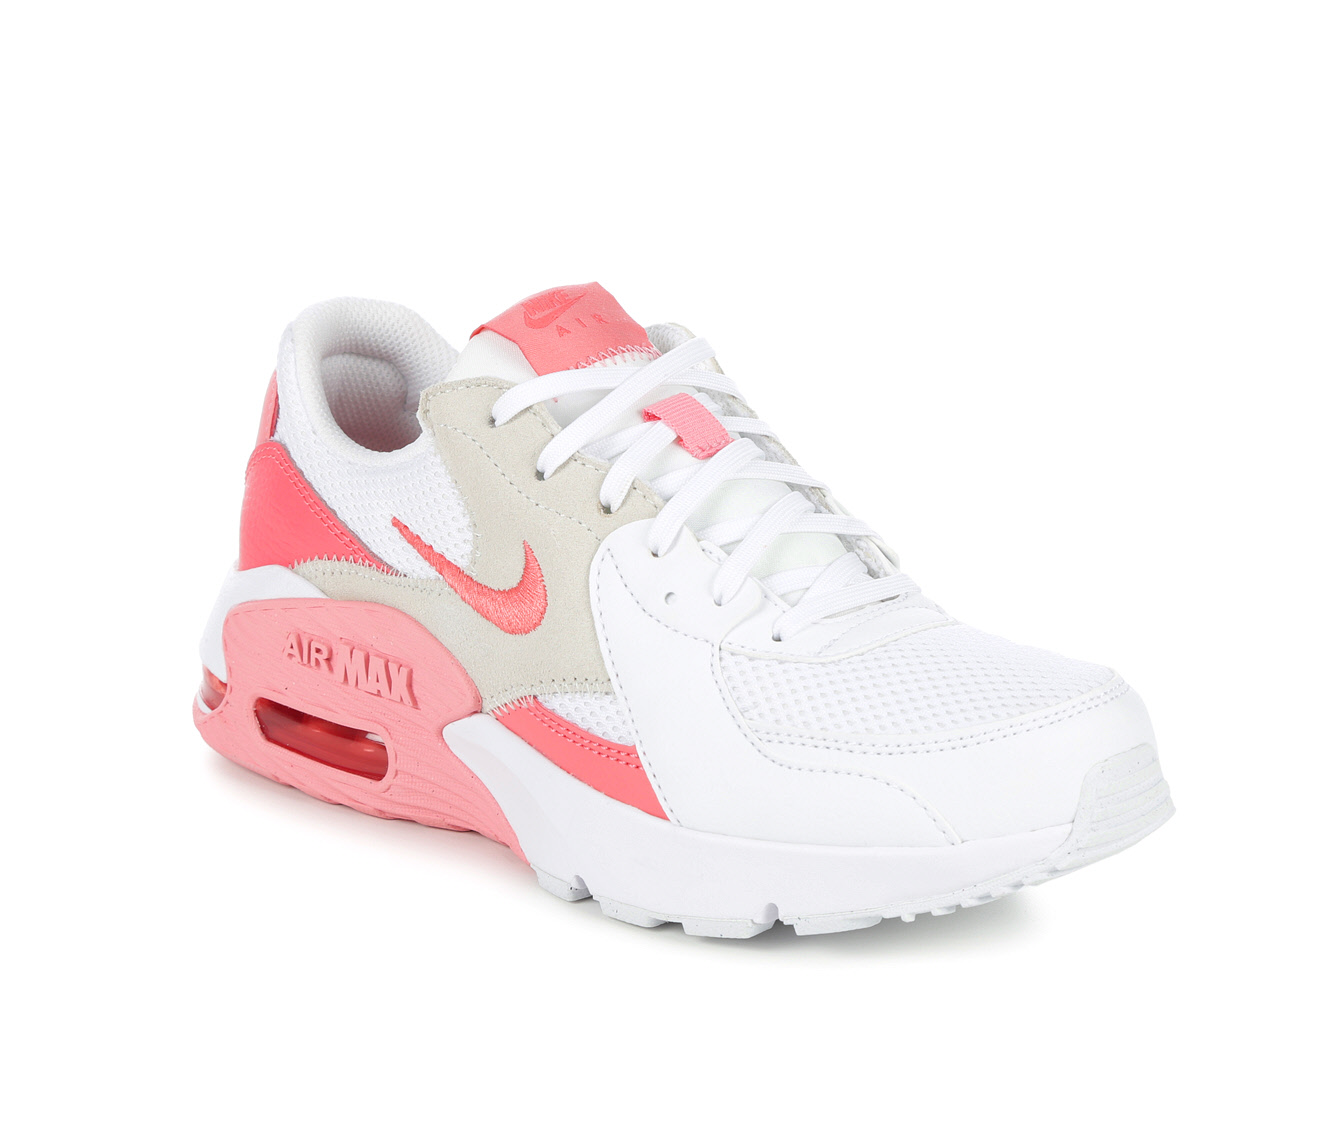 Nike Shoes, Air Max | Shoe